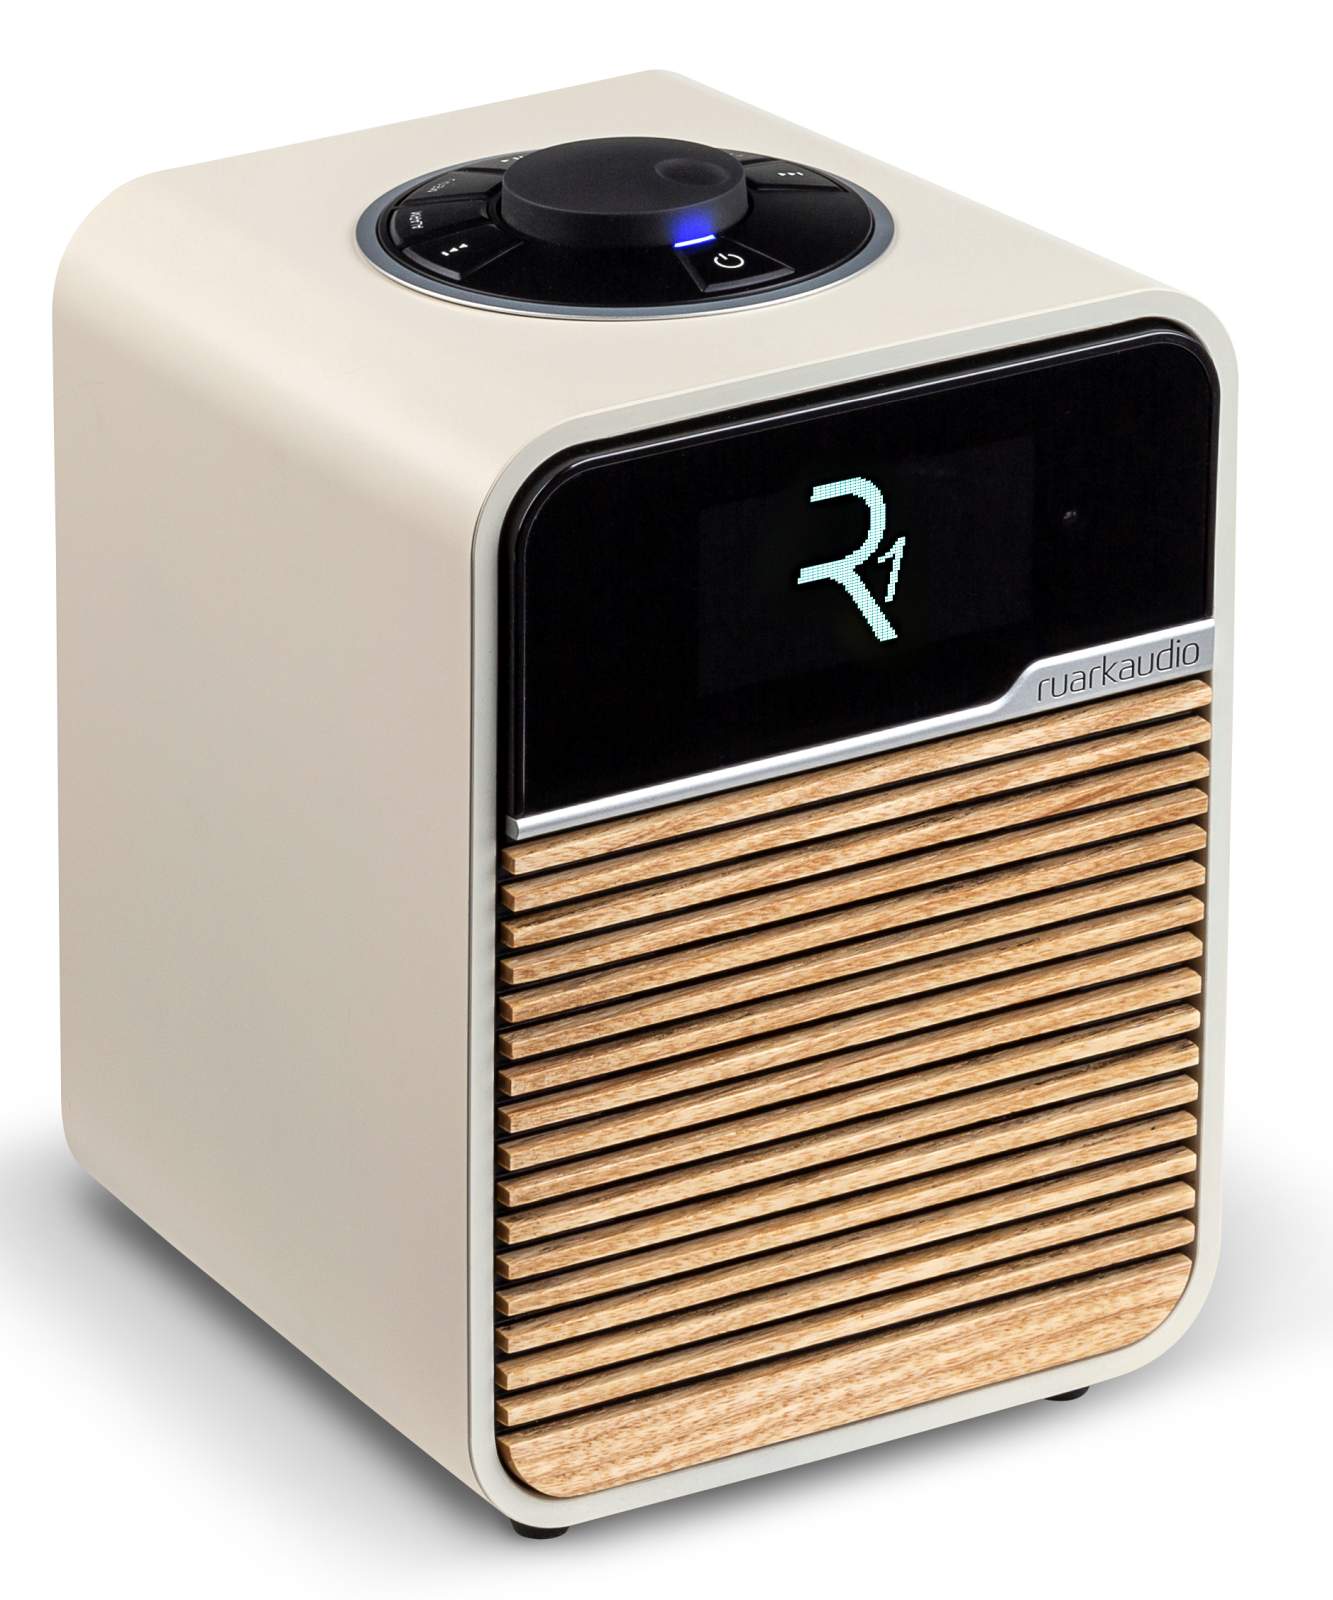 ruarkaudio R1 MK4 Digitalradio Cream (beige)